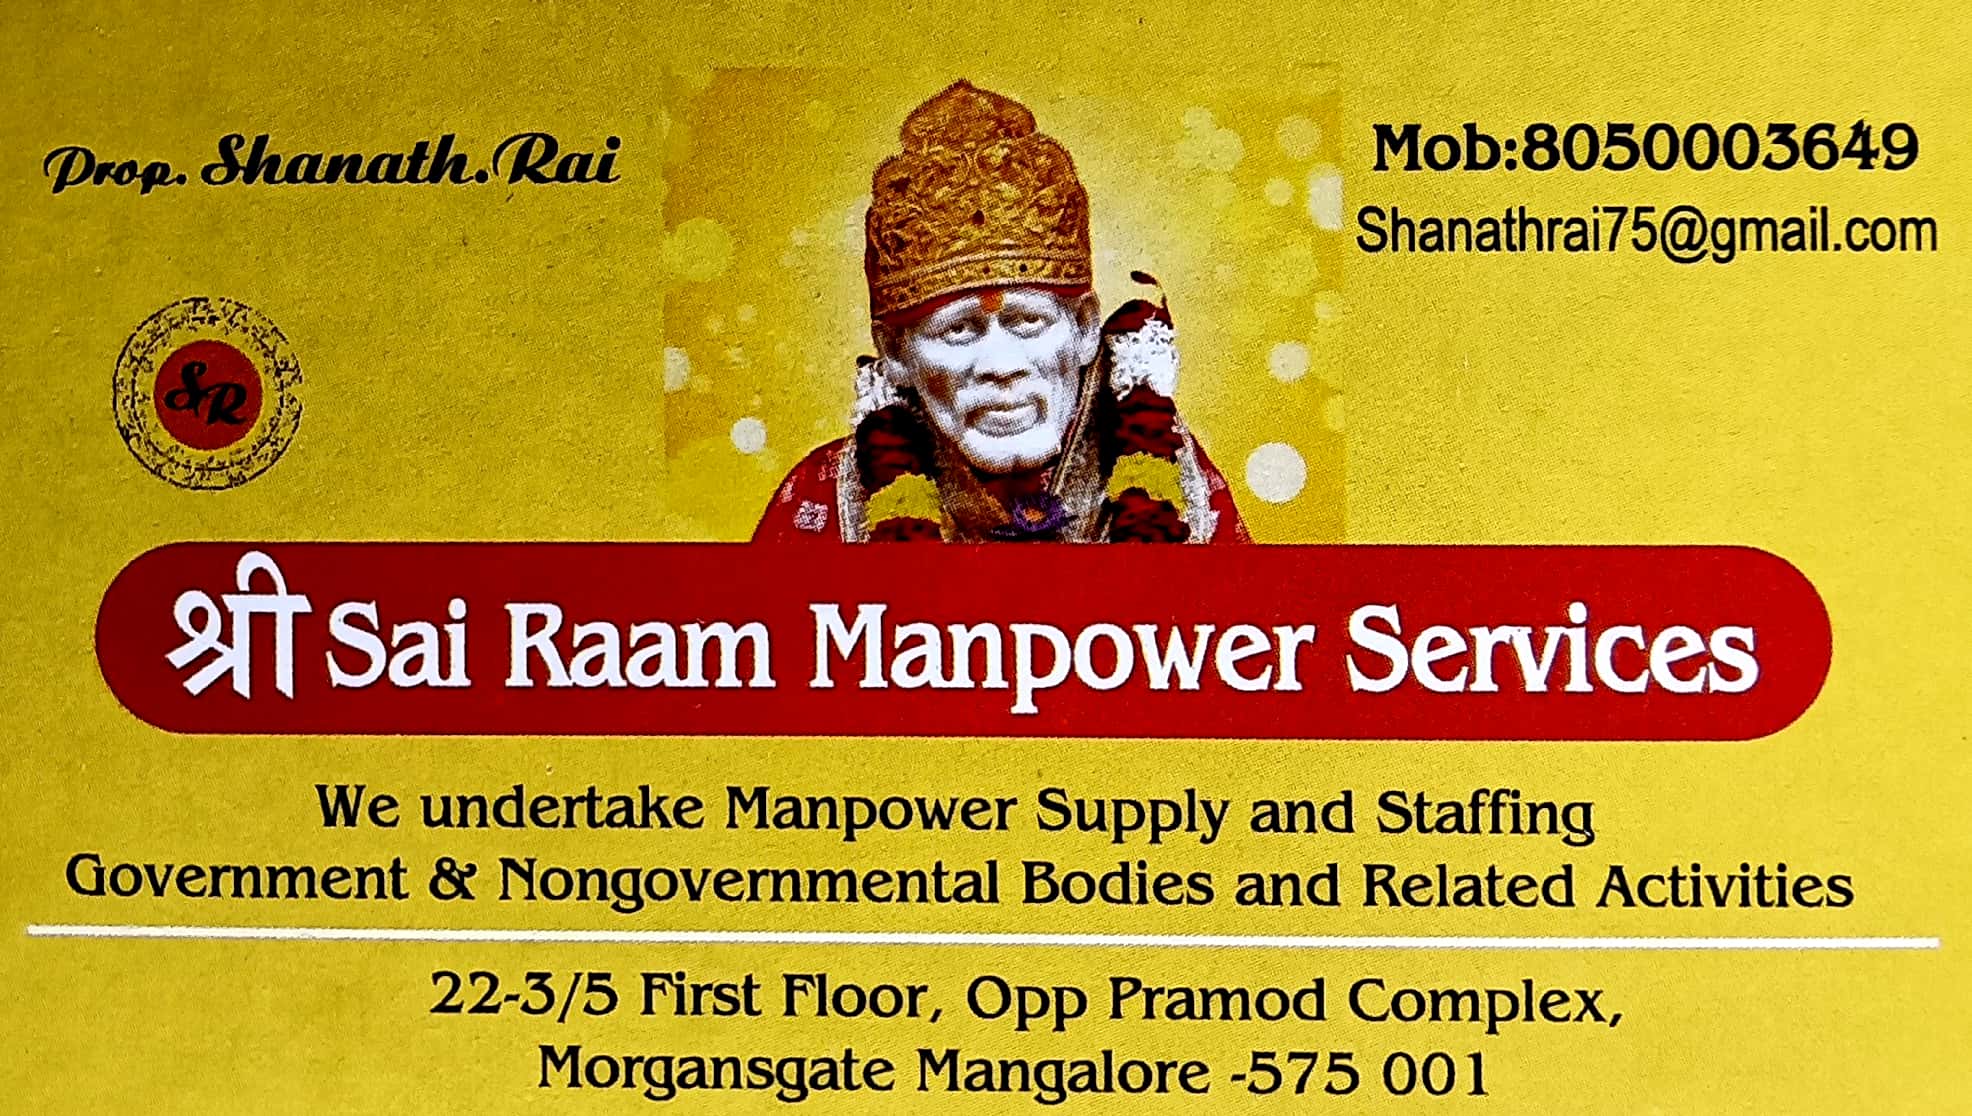 SHRI SAI RAAM MANPOWER SERVICES